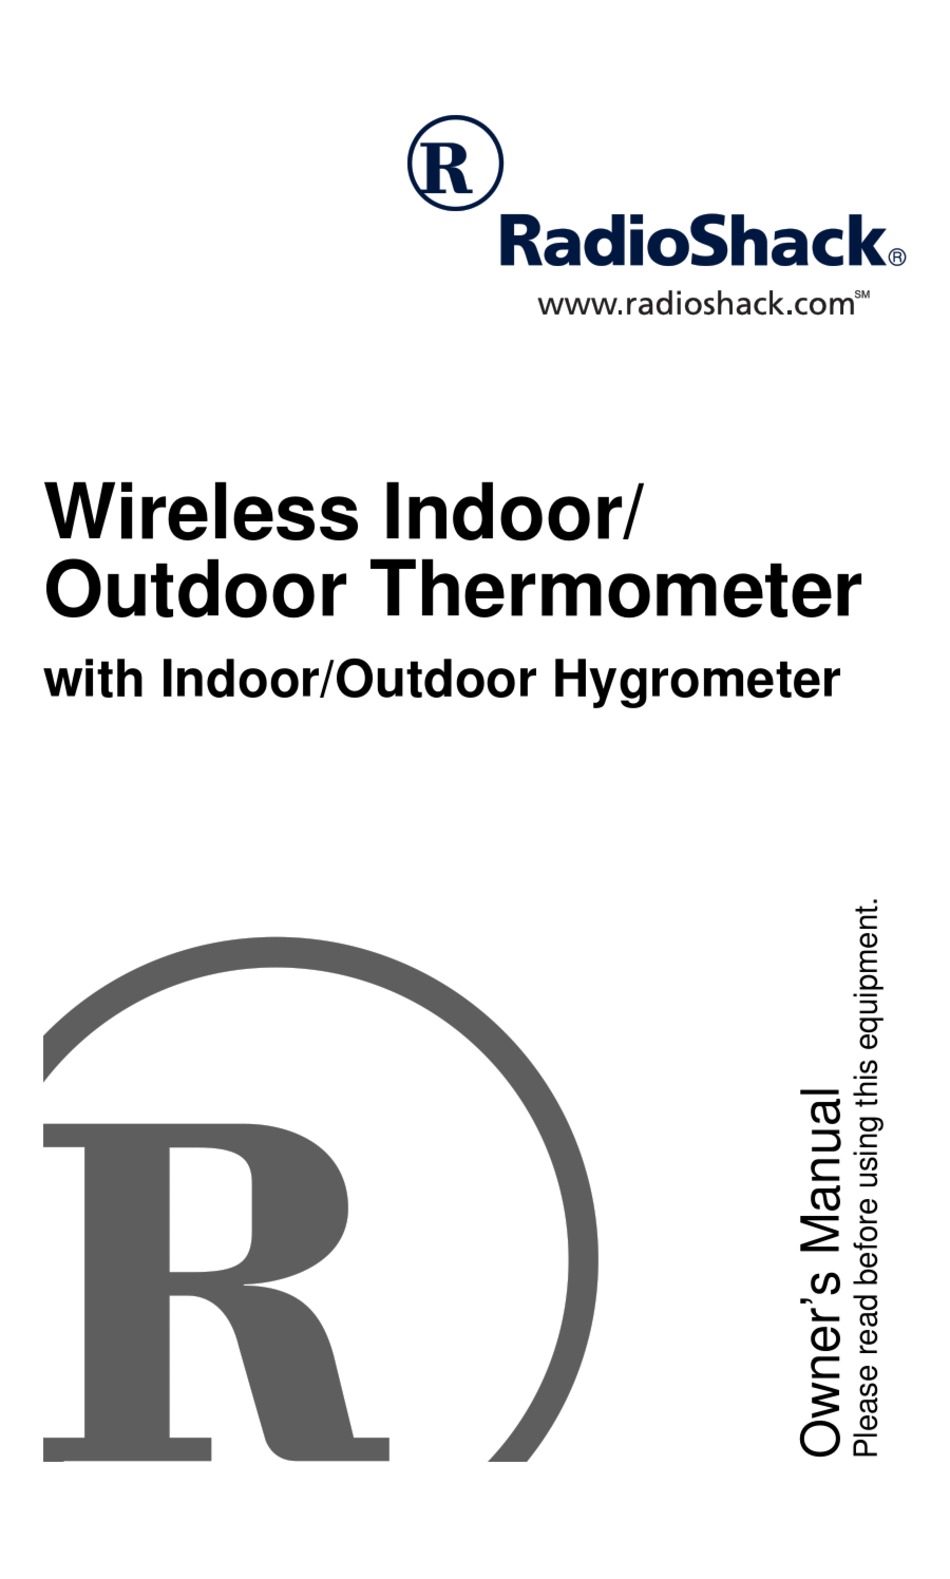 Indoor/Outdoor Thermometer, 9-1/4-In.